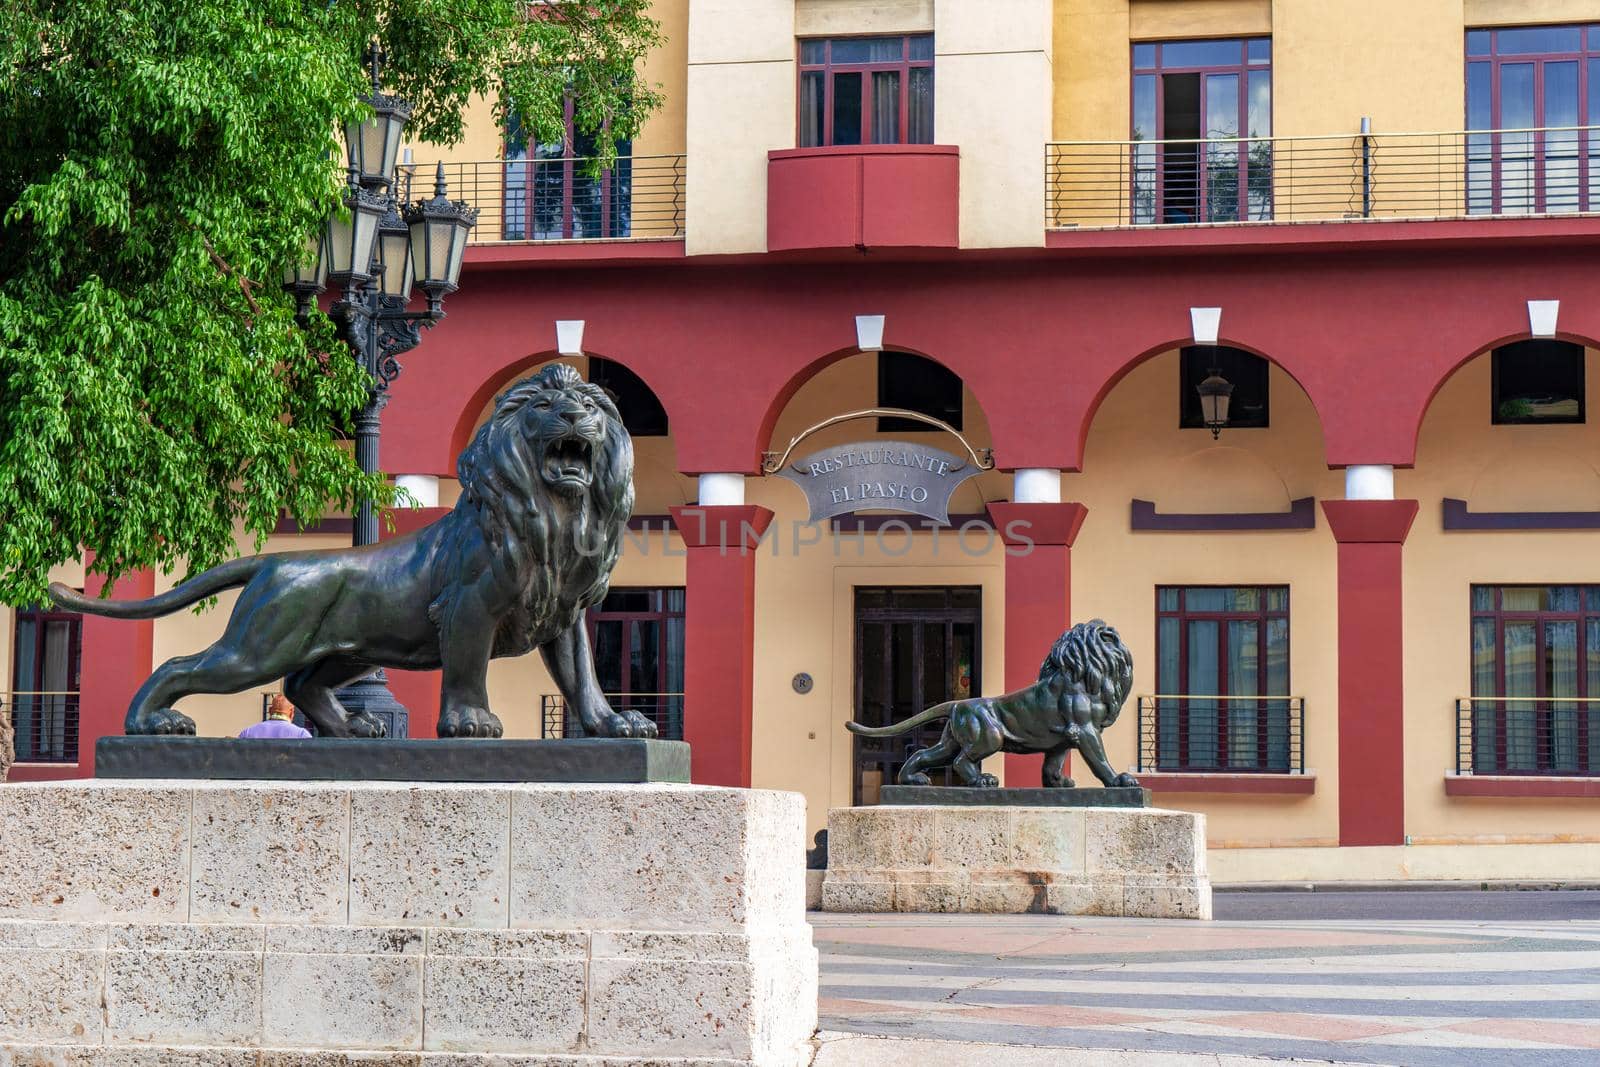 El Paseo Restaurant and the Paseo del Prado lions sculptures by jrivalta